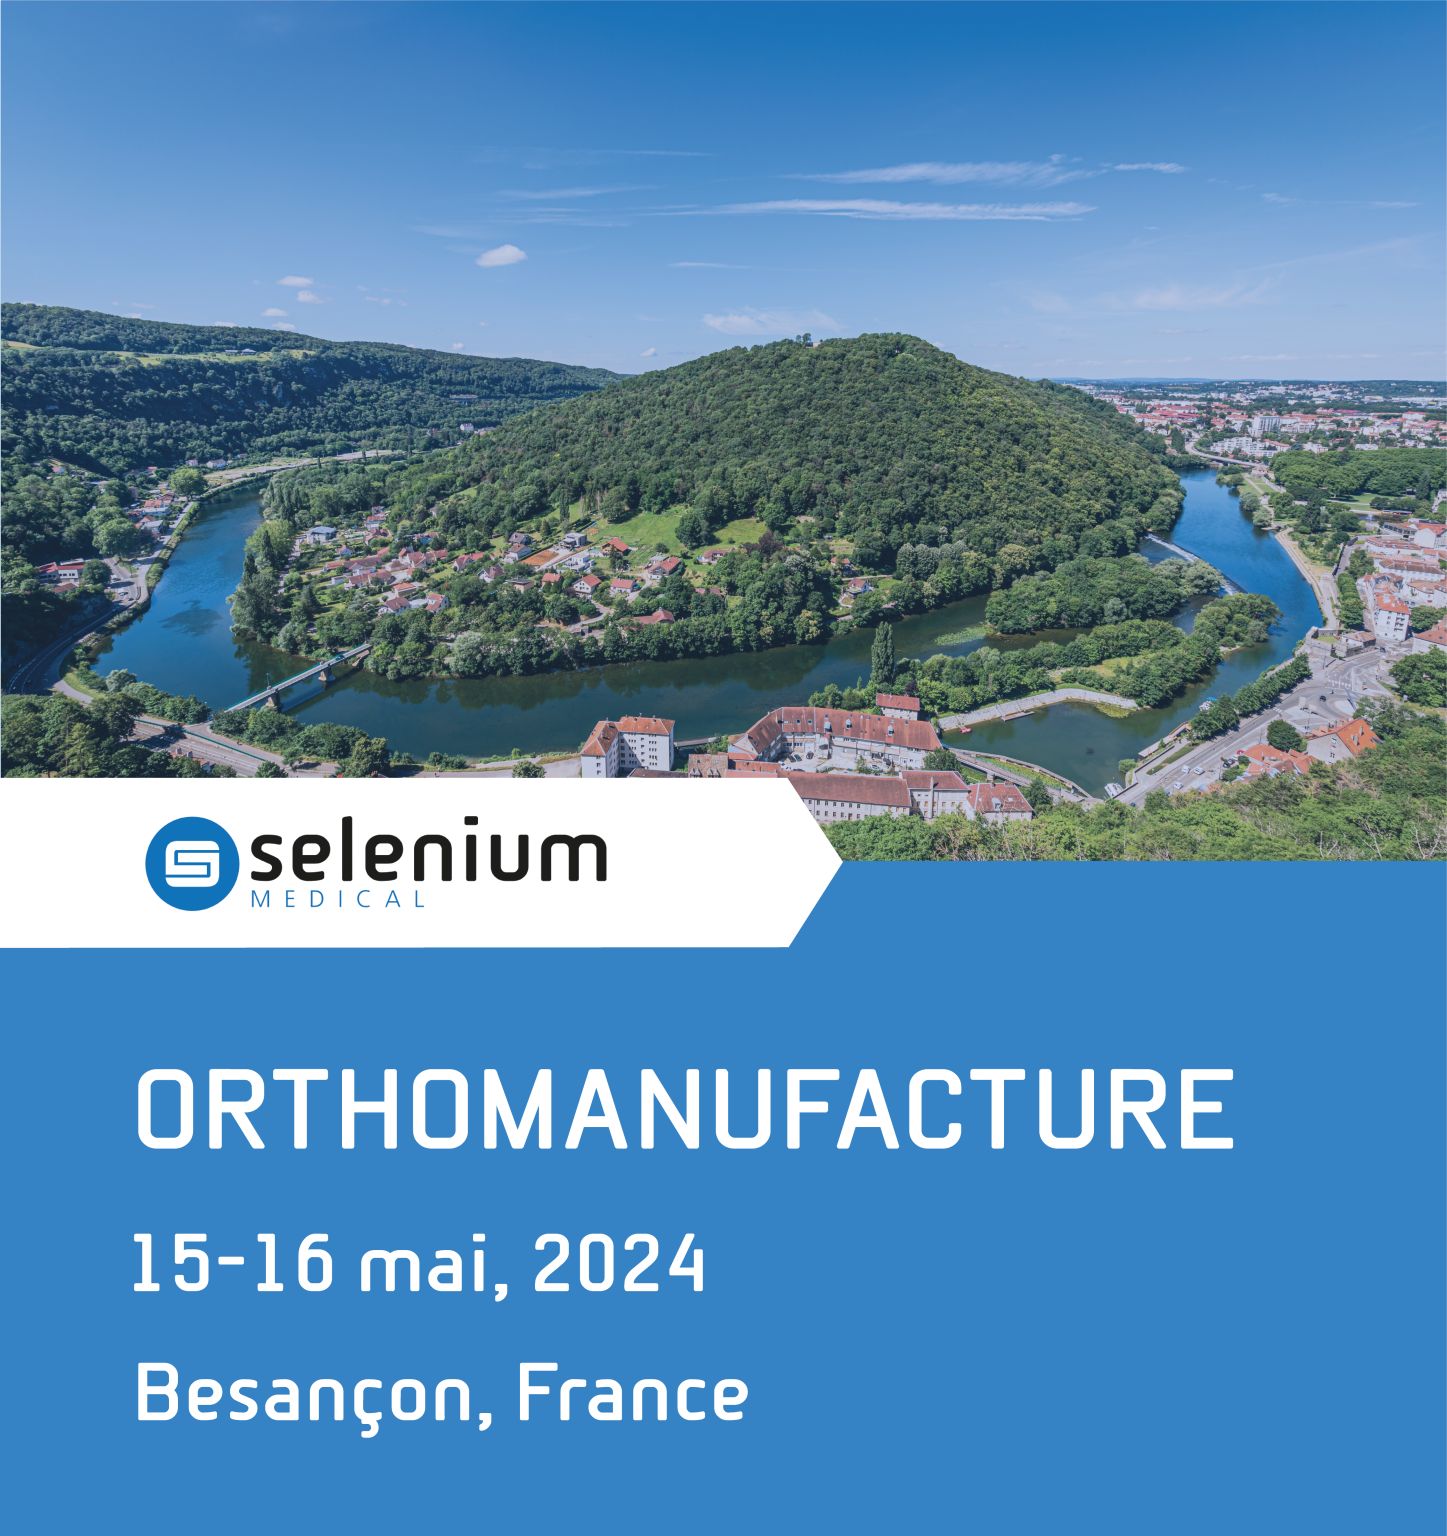 Orthomanufacture - Selenium Medical